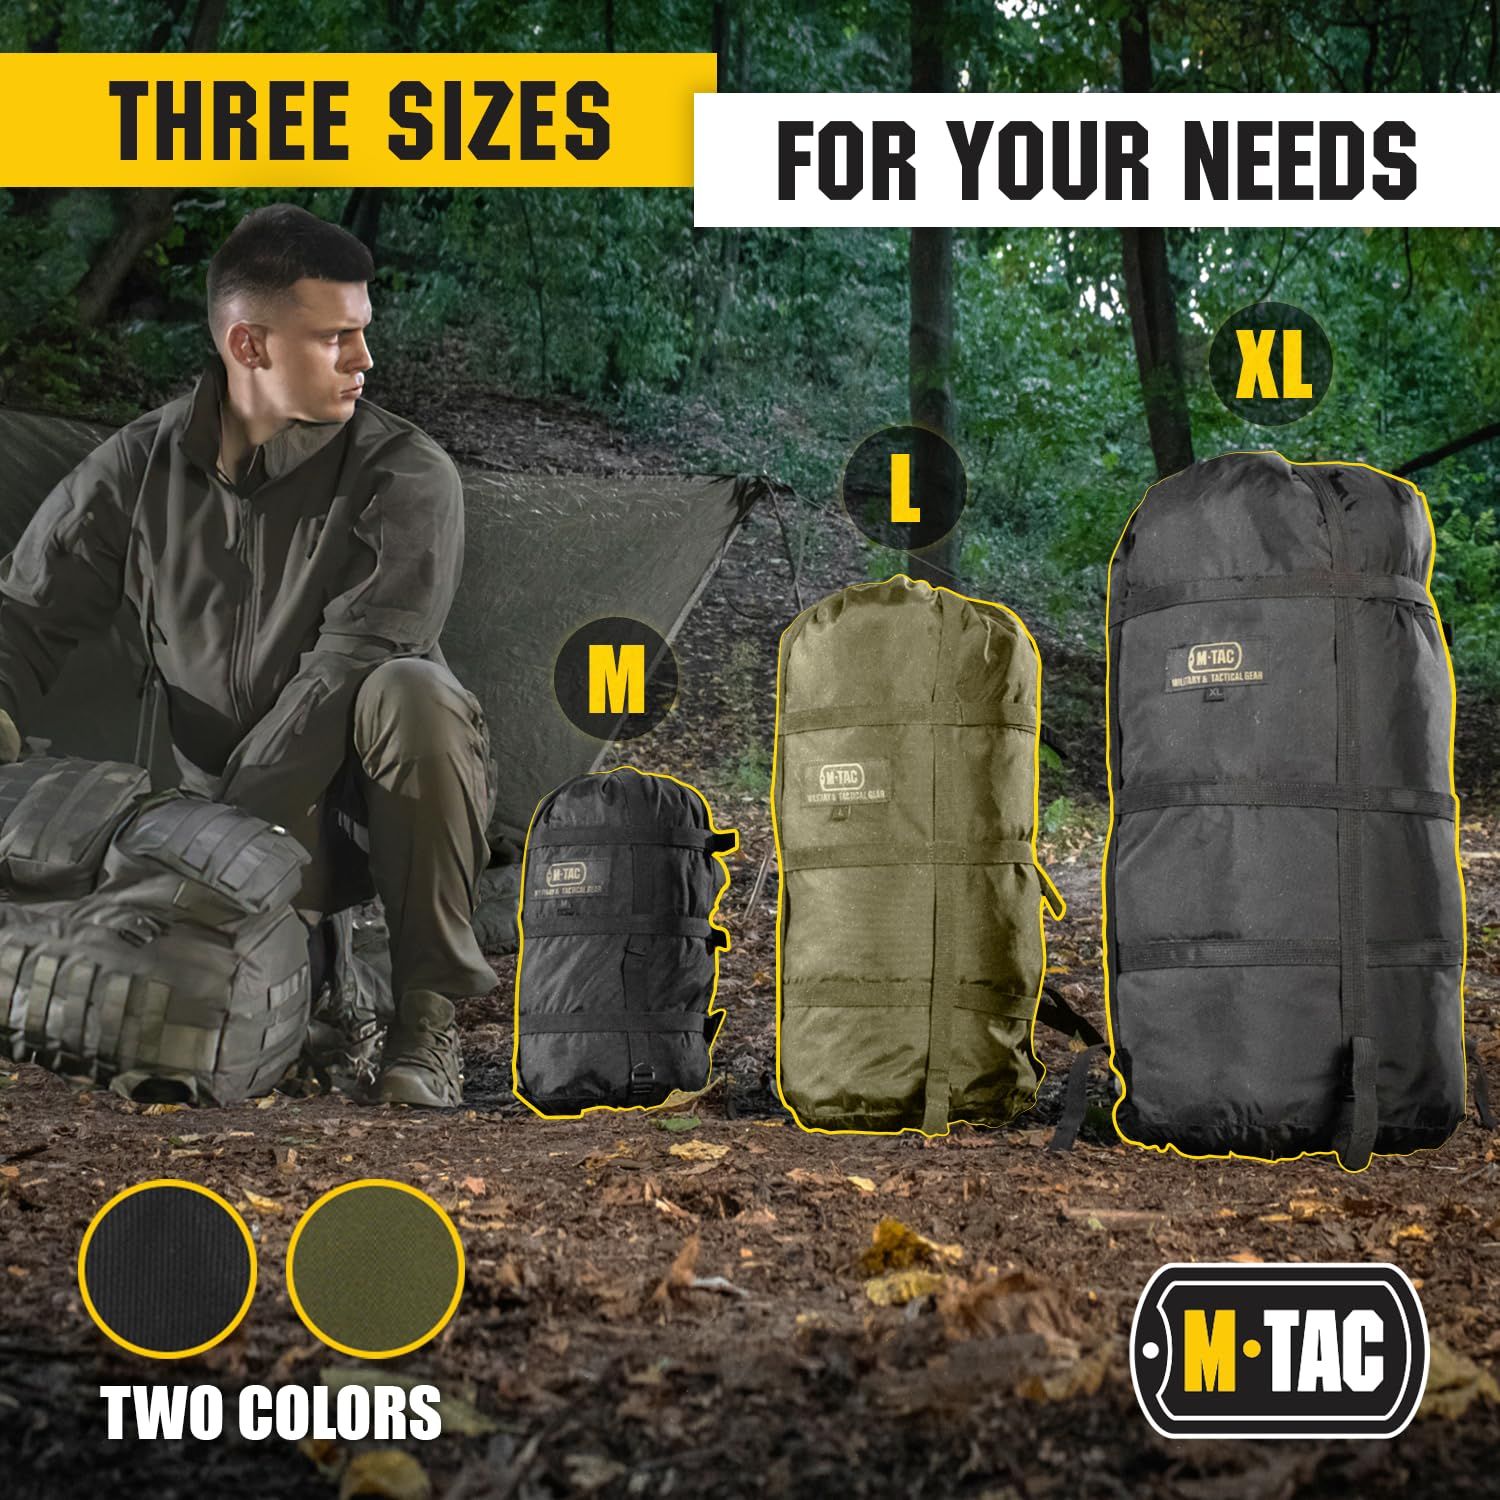 M-Tac ナイロンミリタリー圧縮バッグ スタッフサック 旅行/キャンプ/ハイキング/バックパッキングに M [オリーブ]